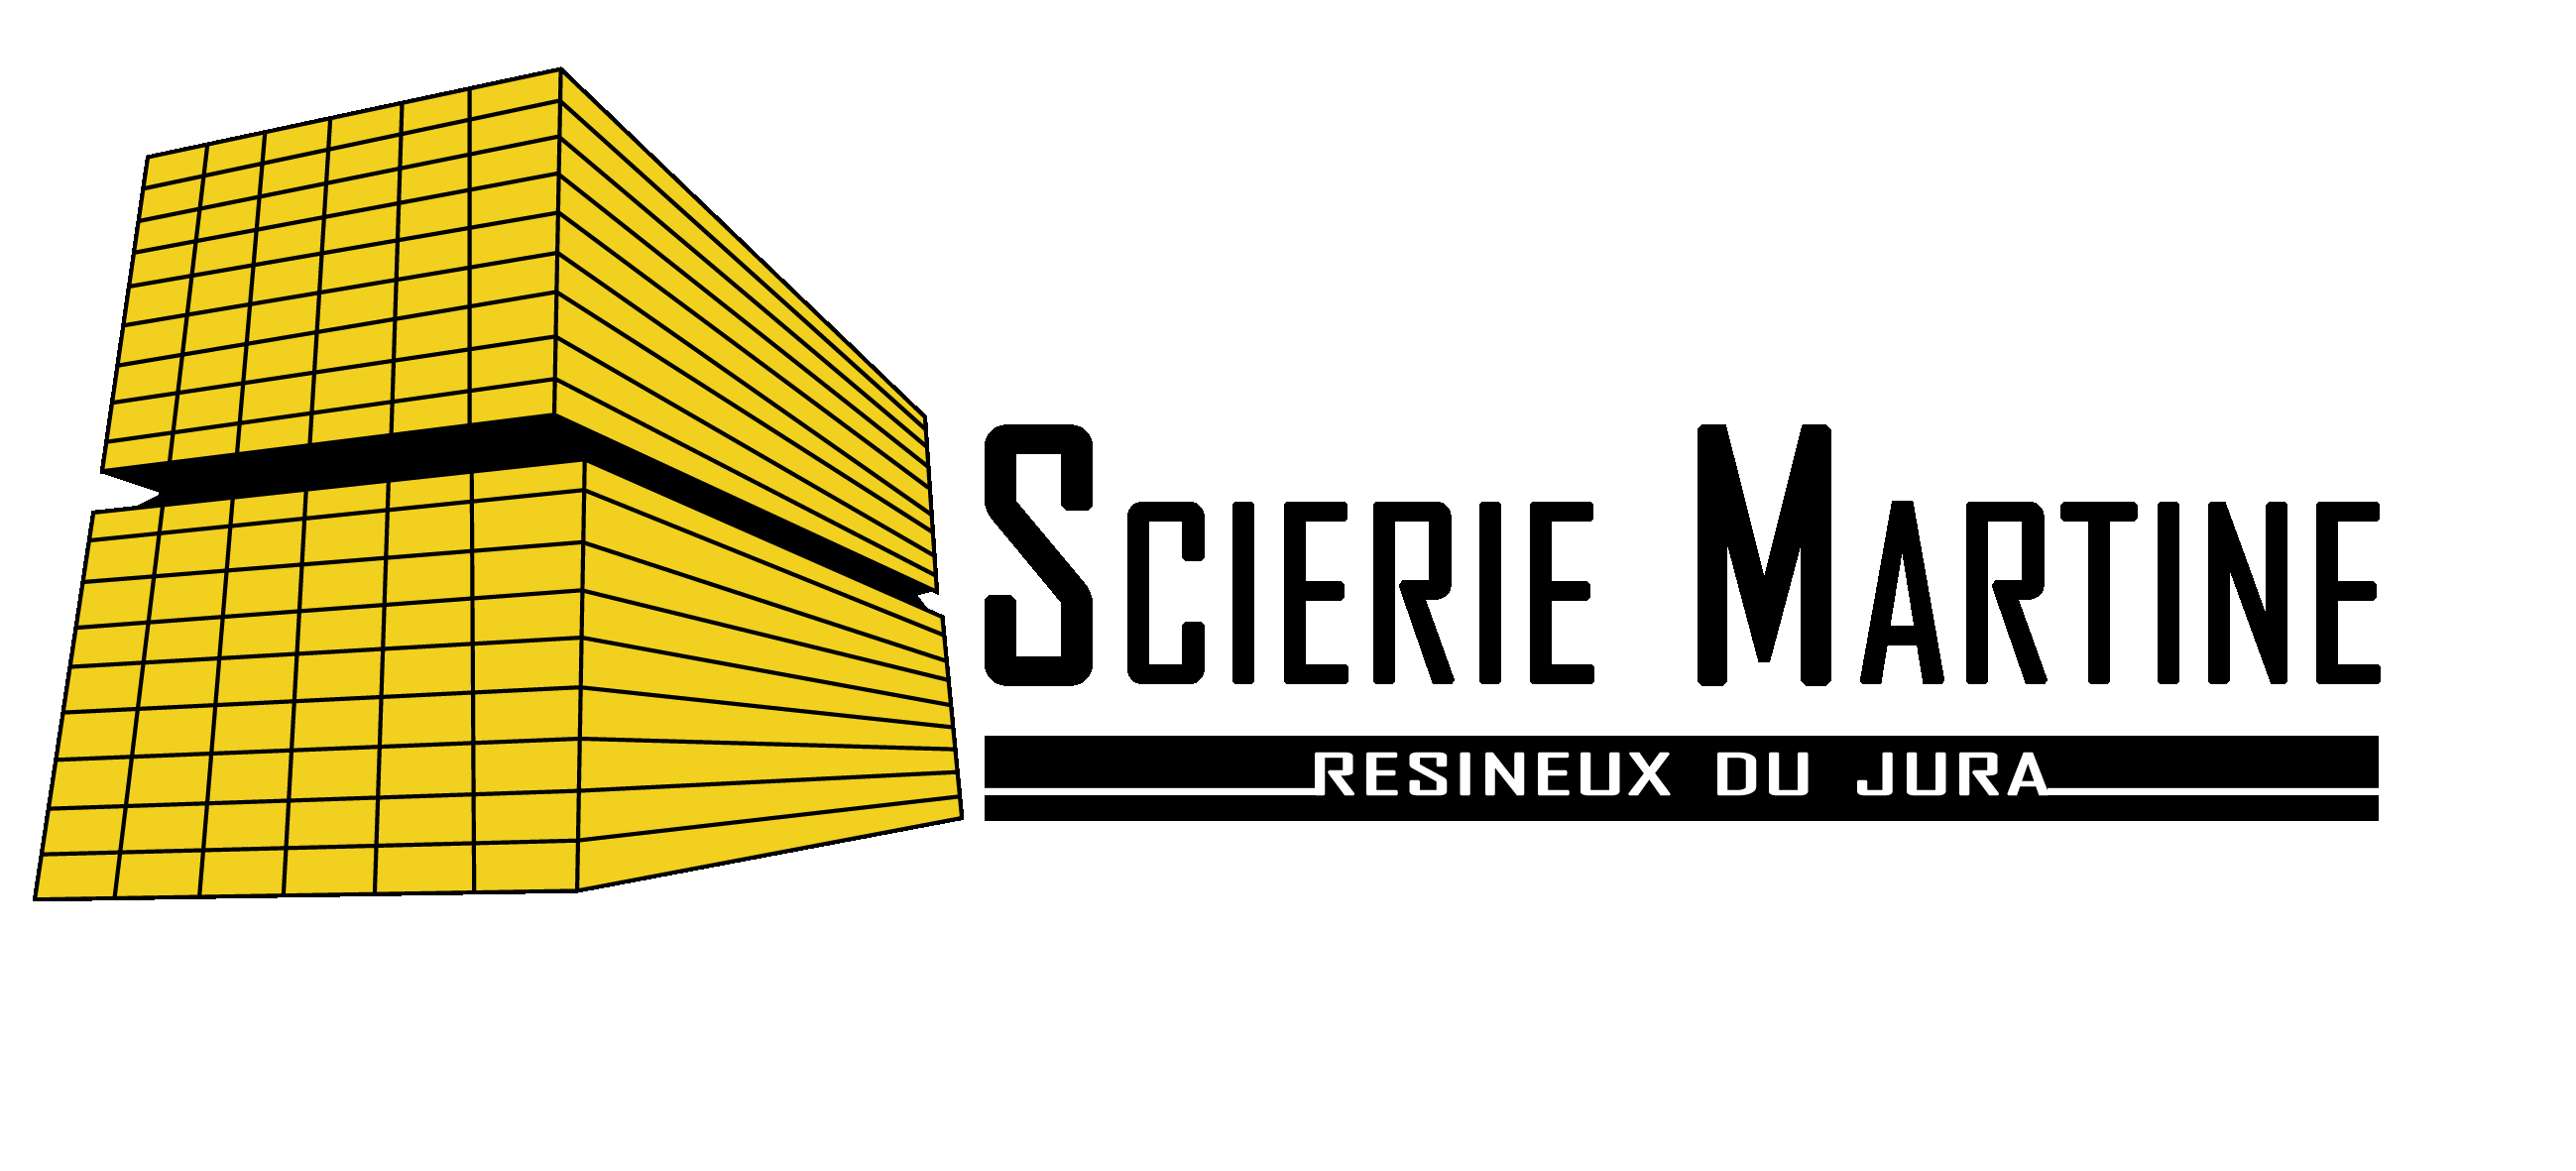 scierie martine logo complet